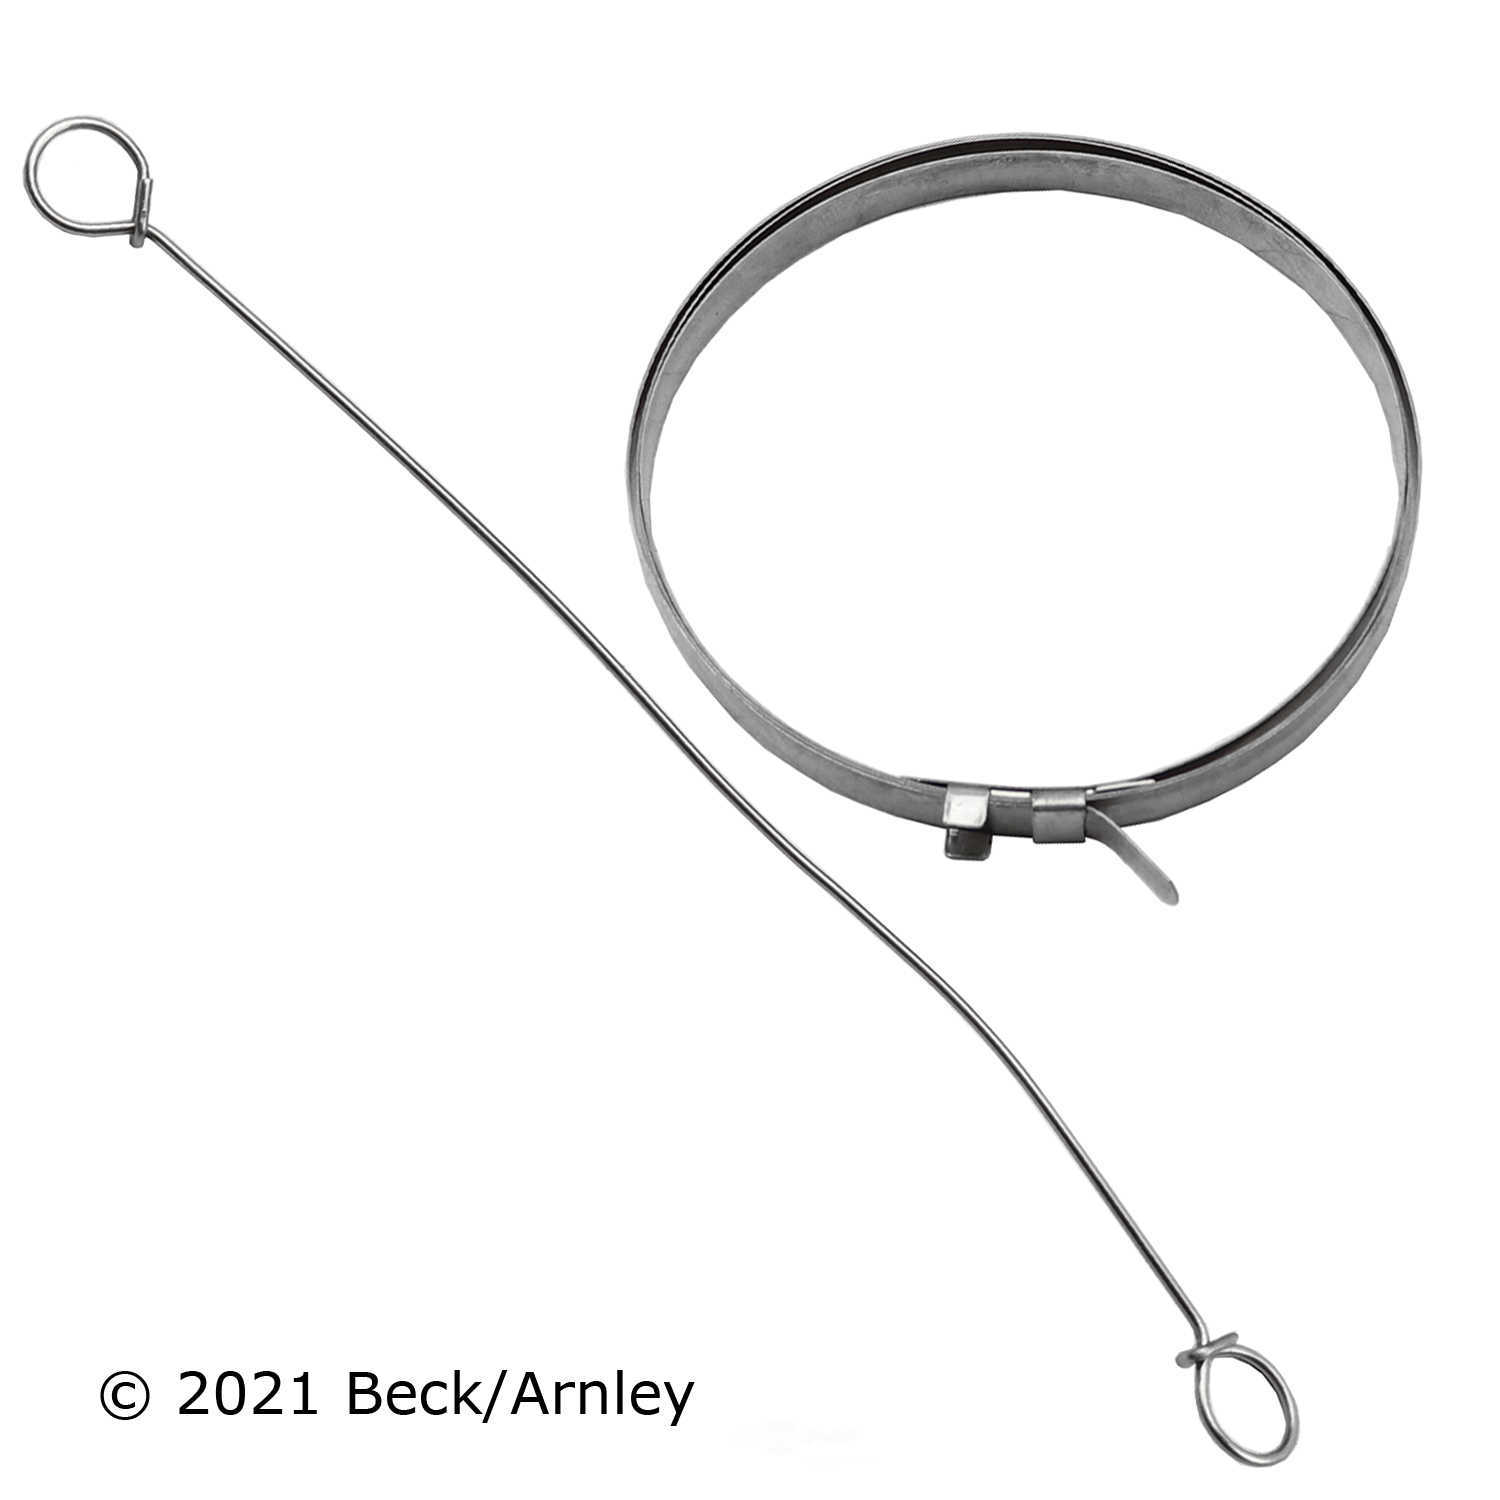 BECK/ARNLEY - Rack And Pinion Bellow Kit - BAR 103-2879